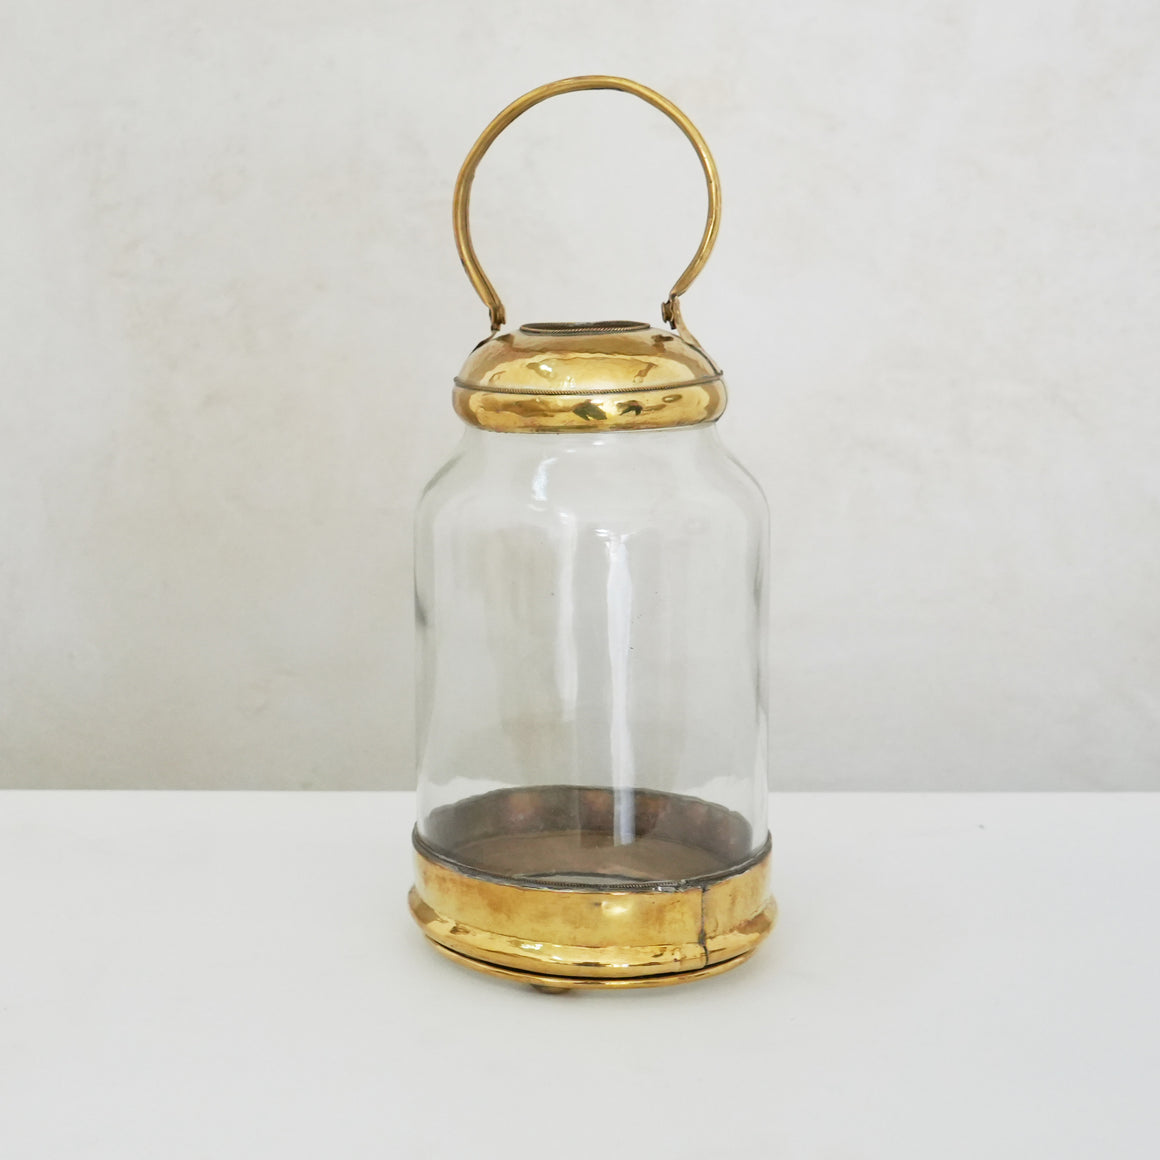 Vintage Glass Lantern